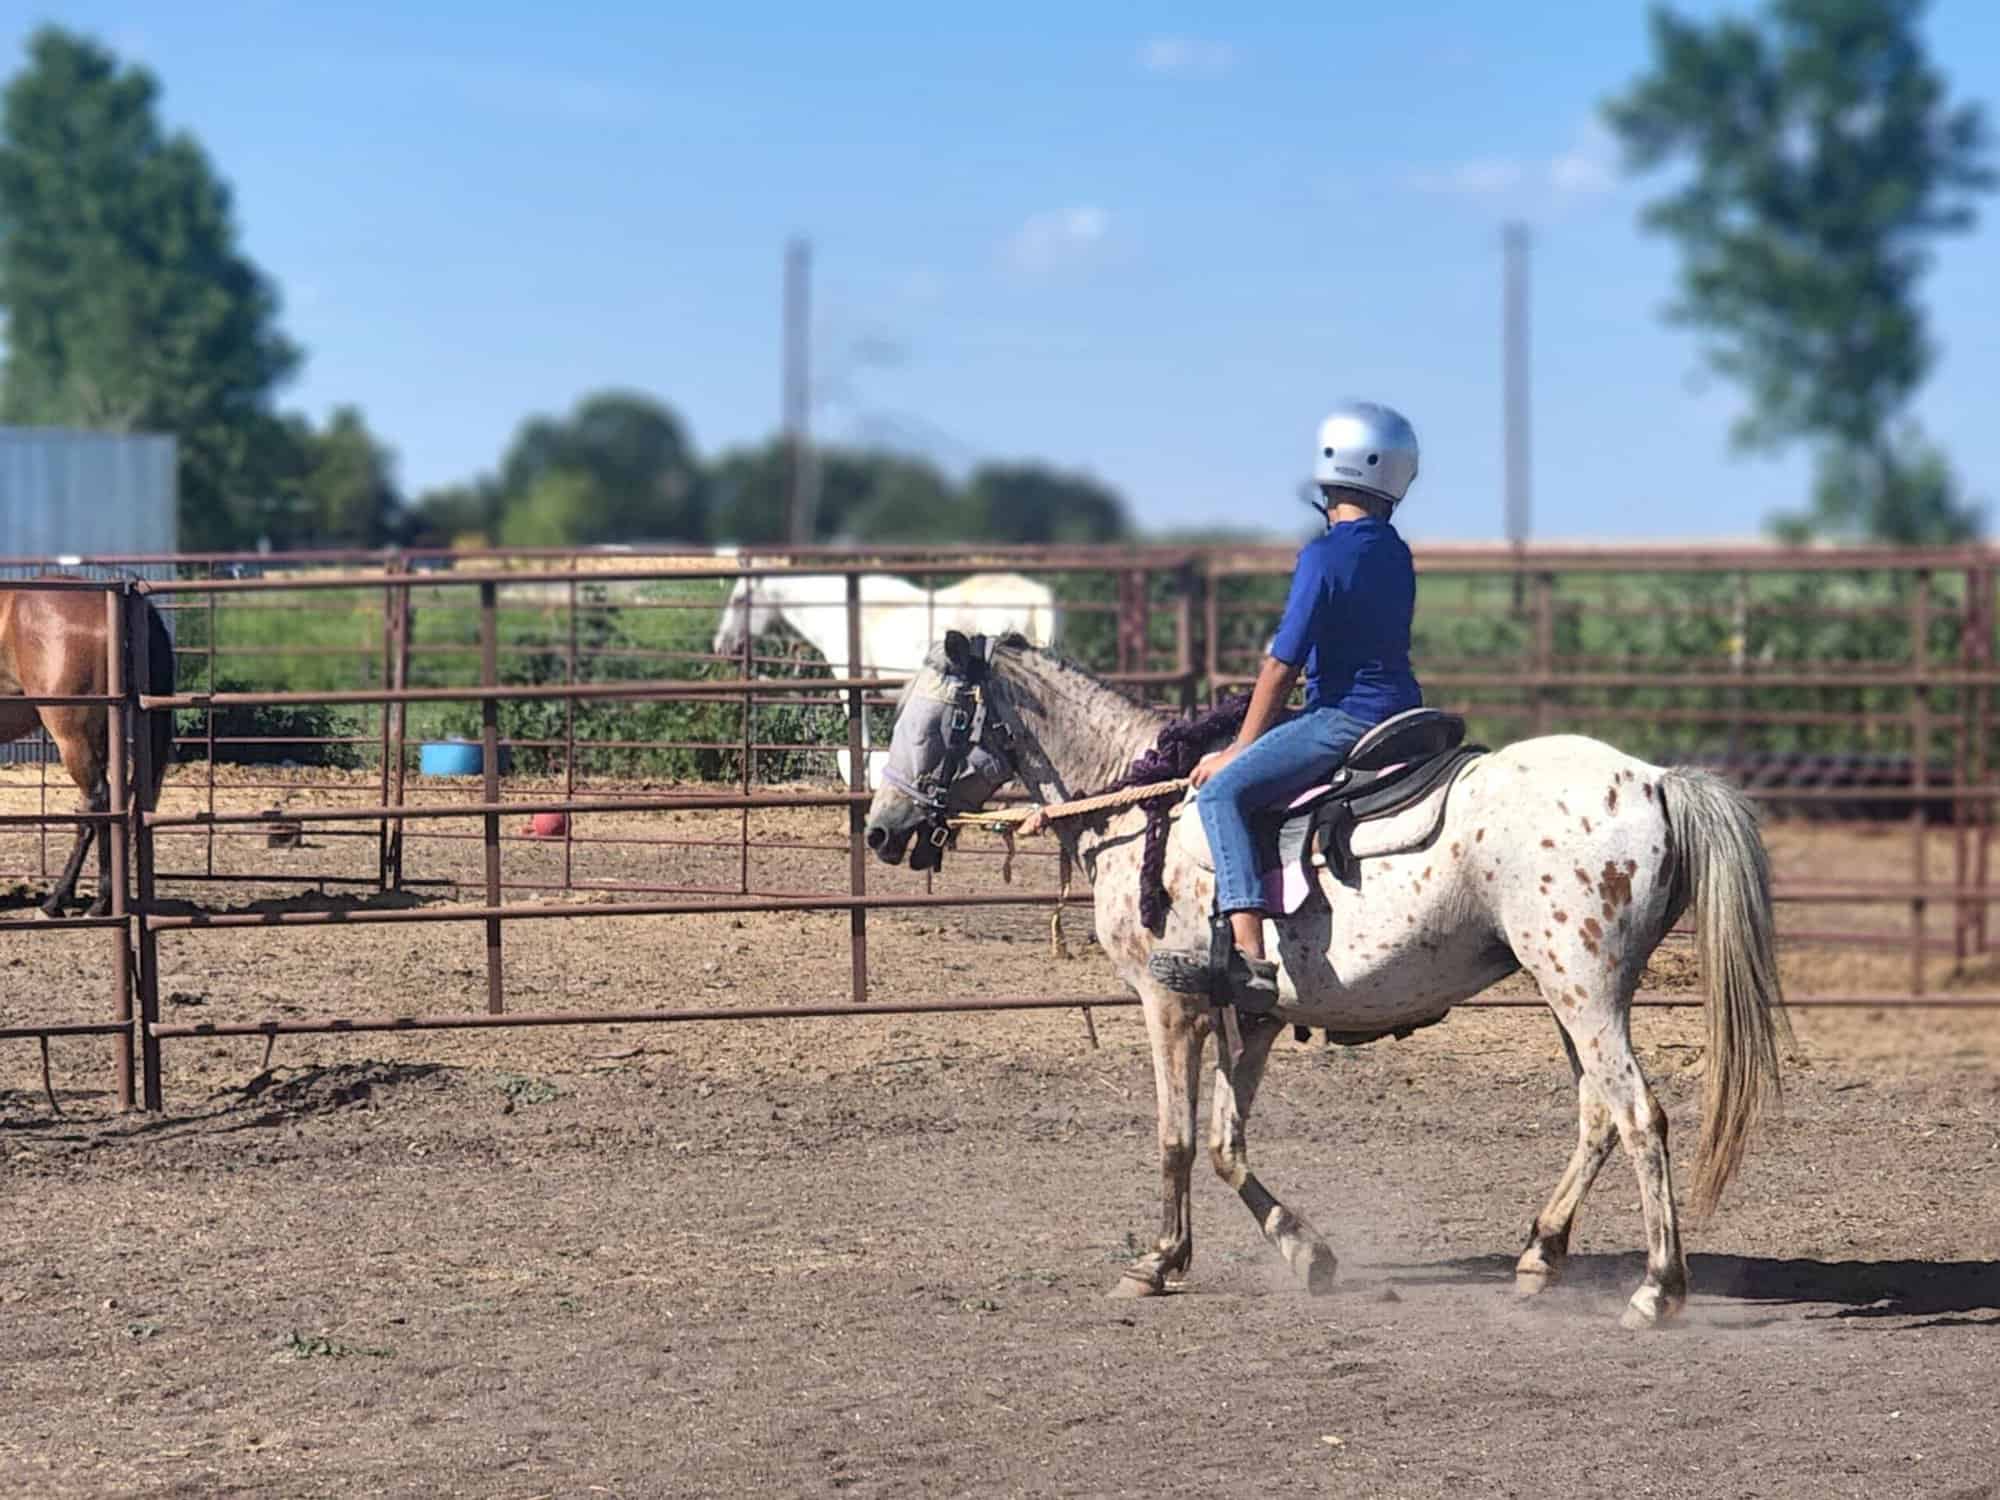 types of horseback riding lessons for kids